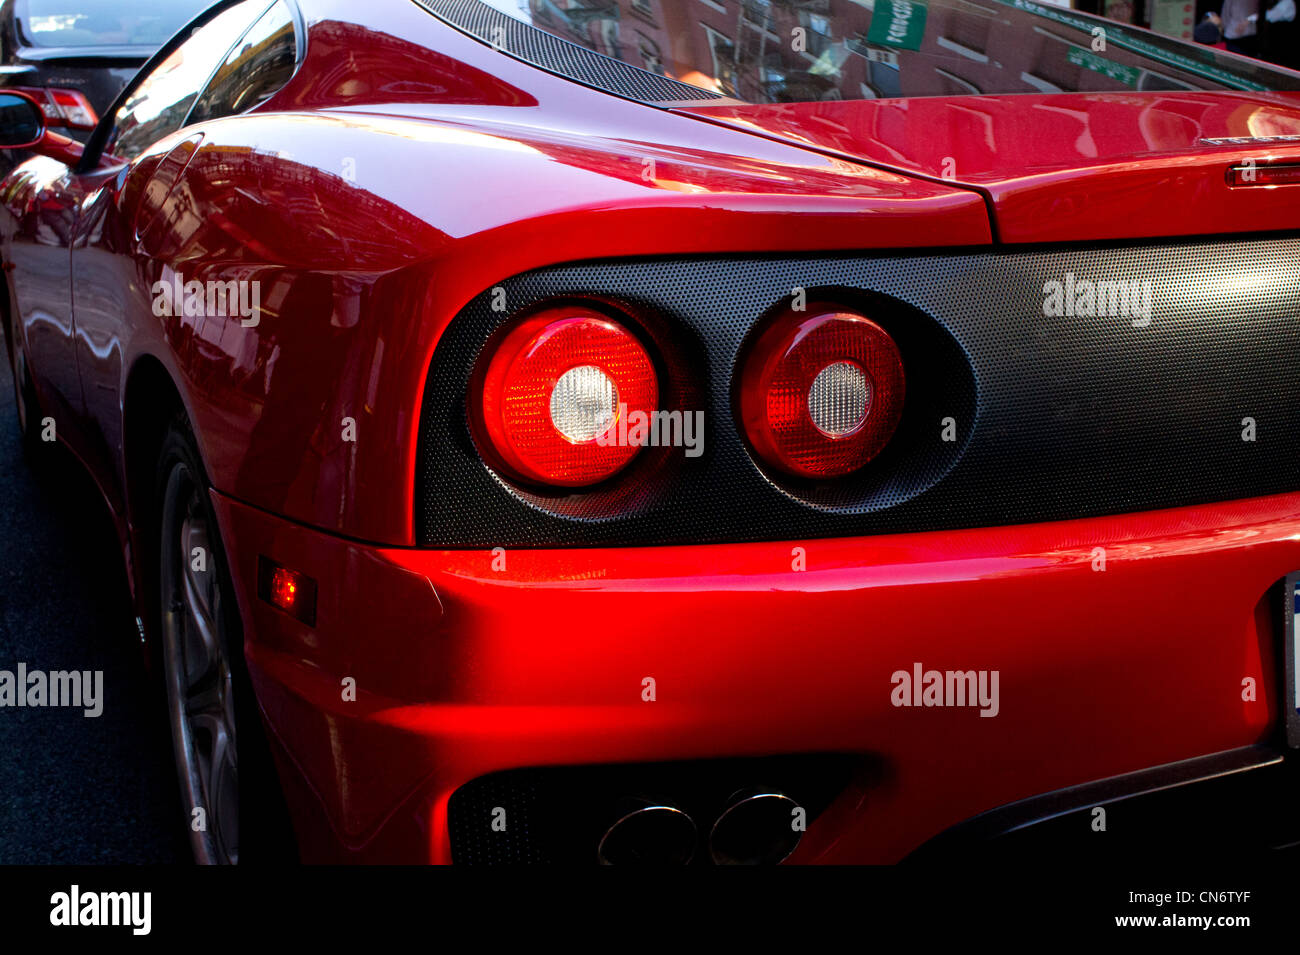 Red Ferrari moving slowly in New York City traffic. Stock Photo